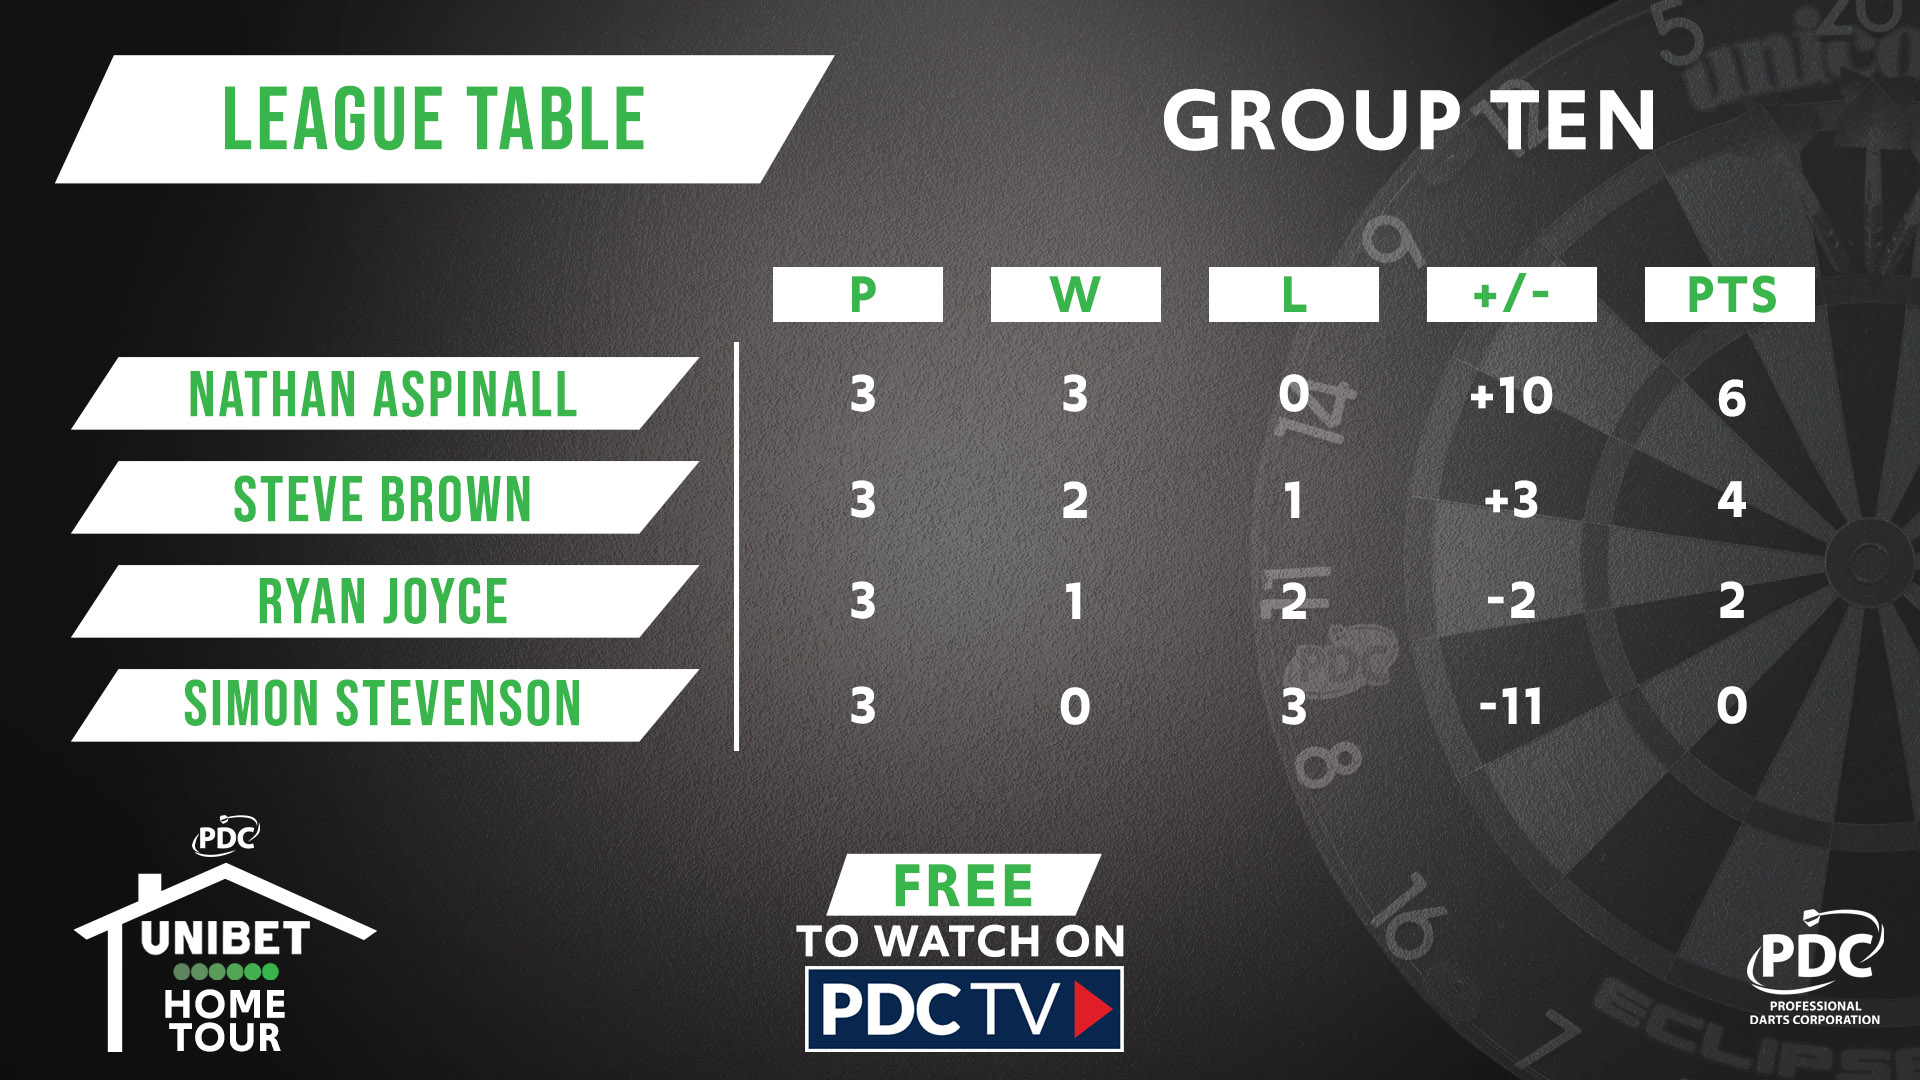 Group Ten table